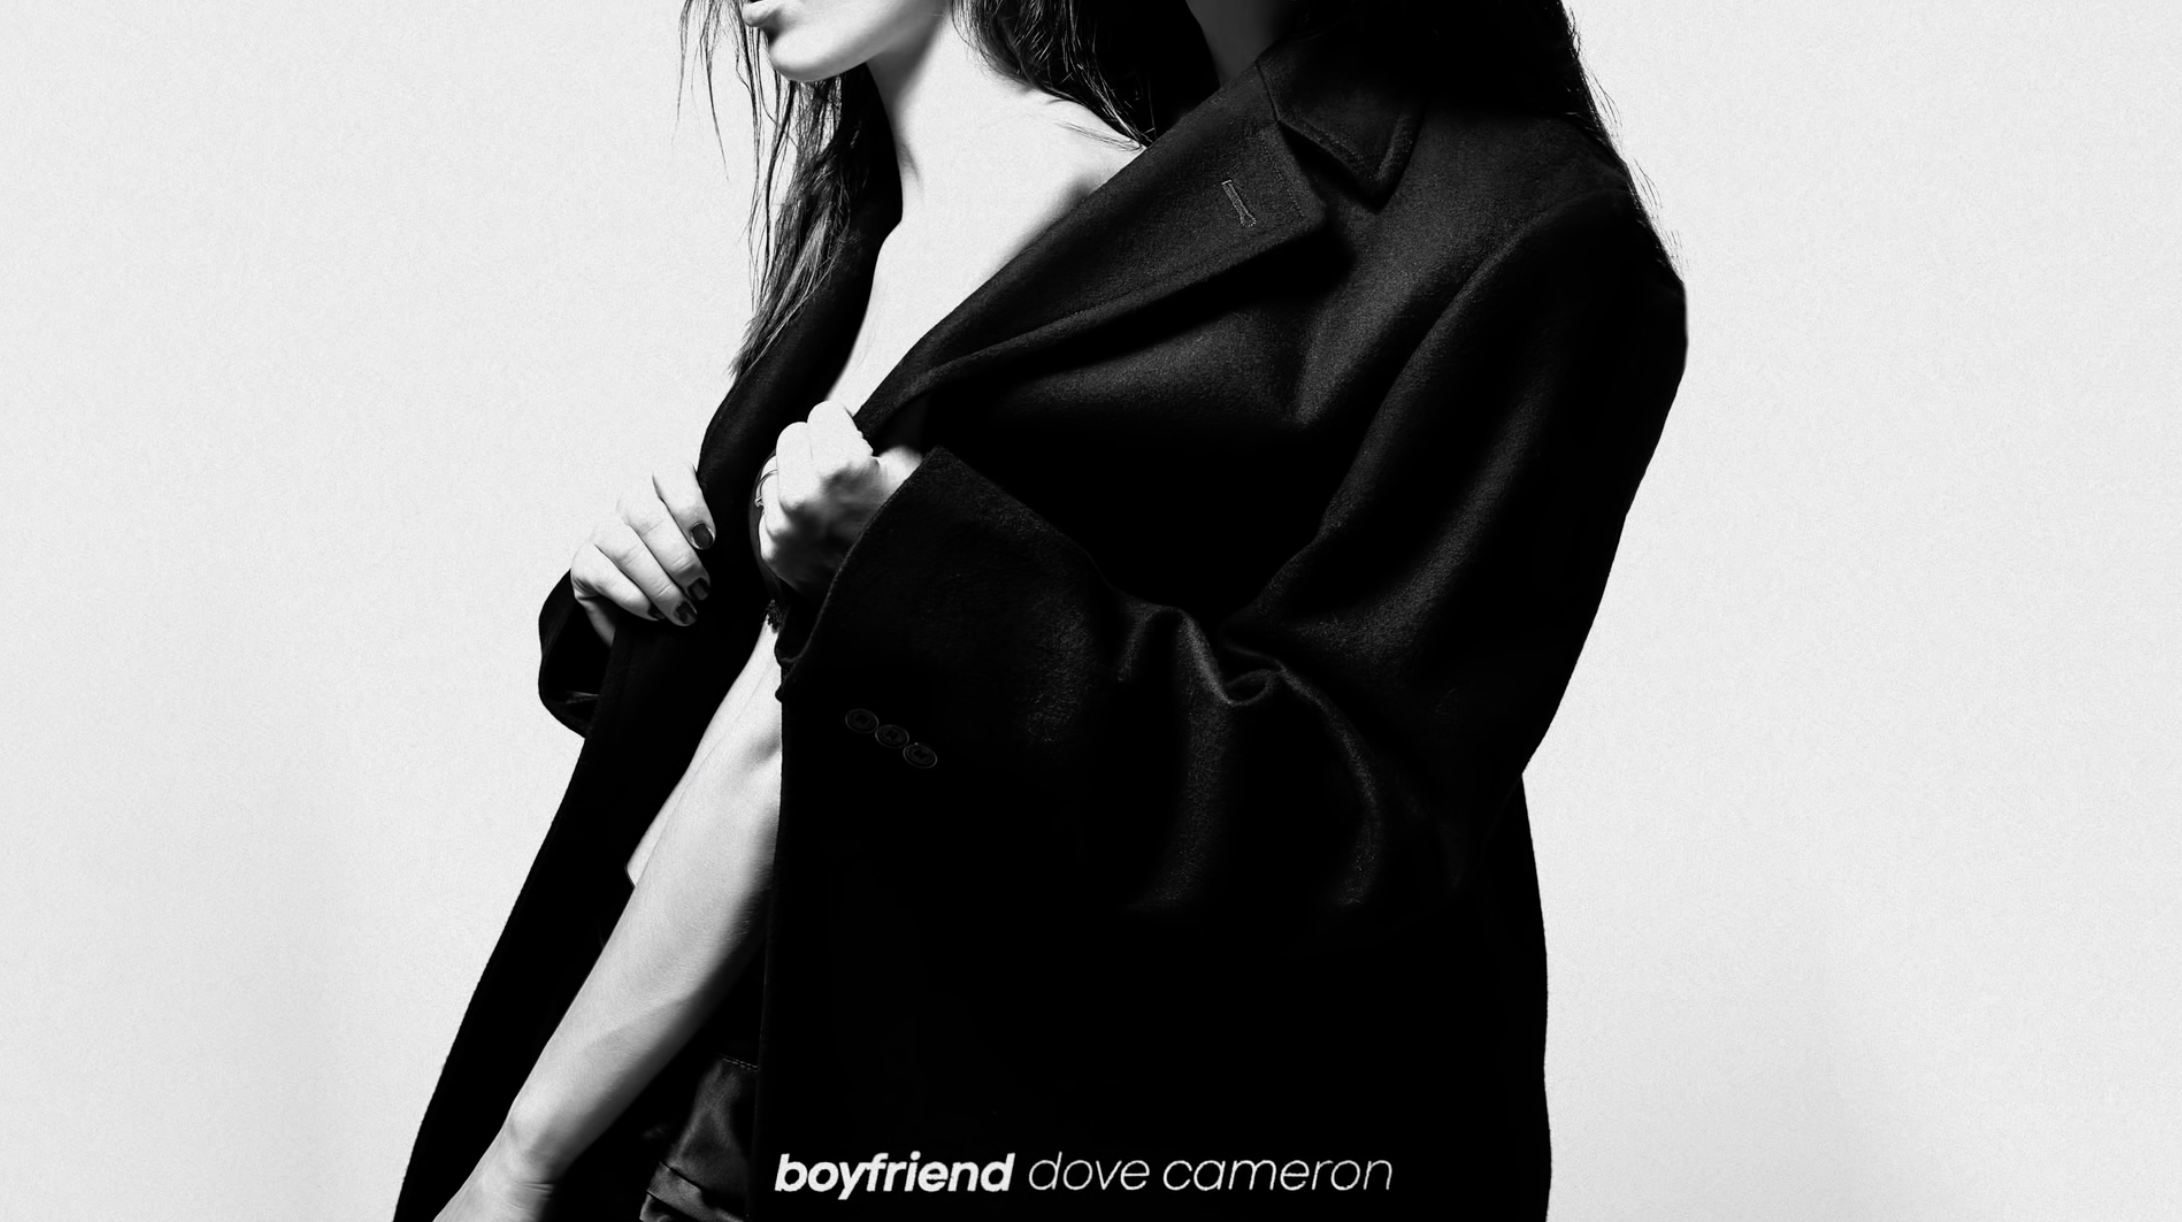 Good my boyfriend. Boyfriend дав Камерон. Dove Cameron boyfriend. Dove Cameron - boyfriend boyfriend. Dove Cameron boyfriend обложка.